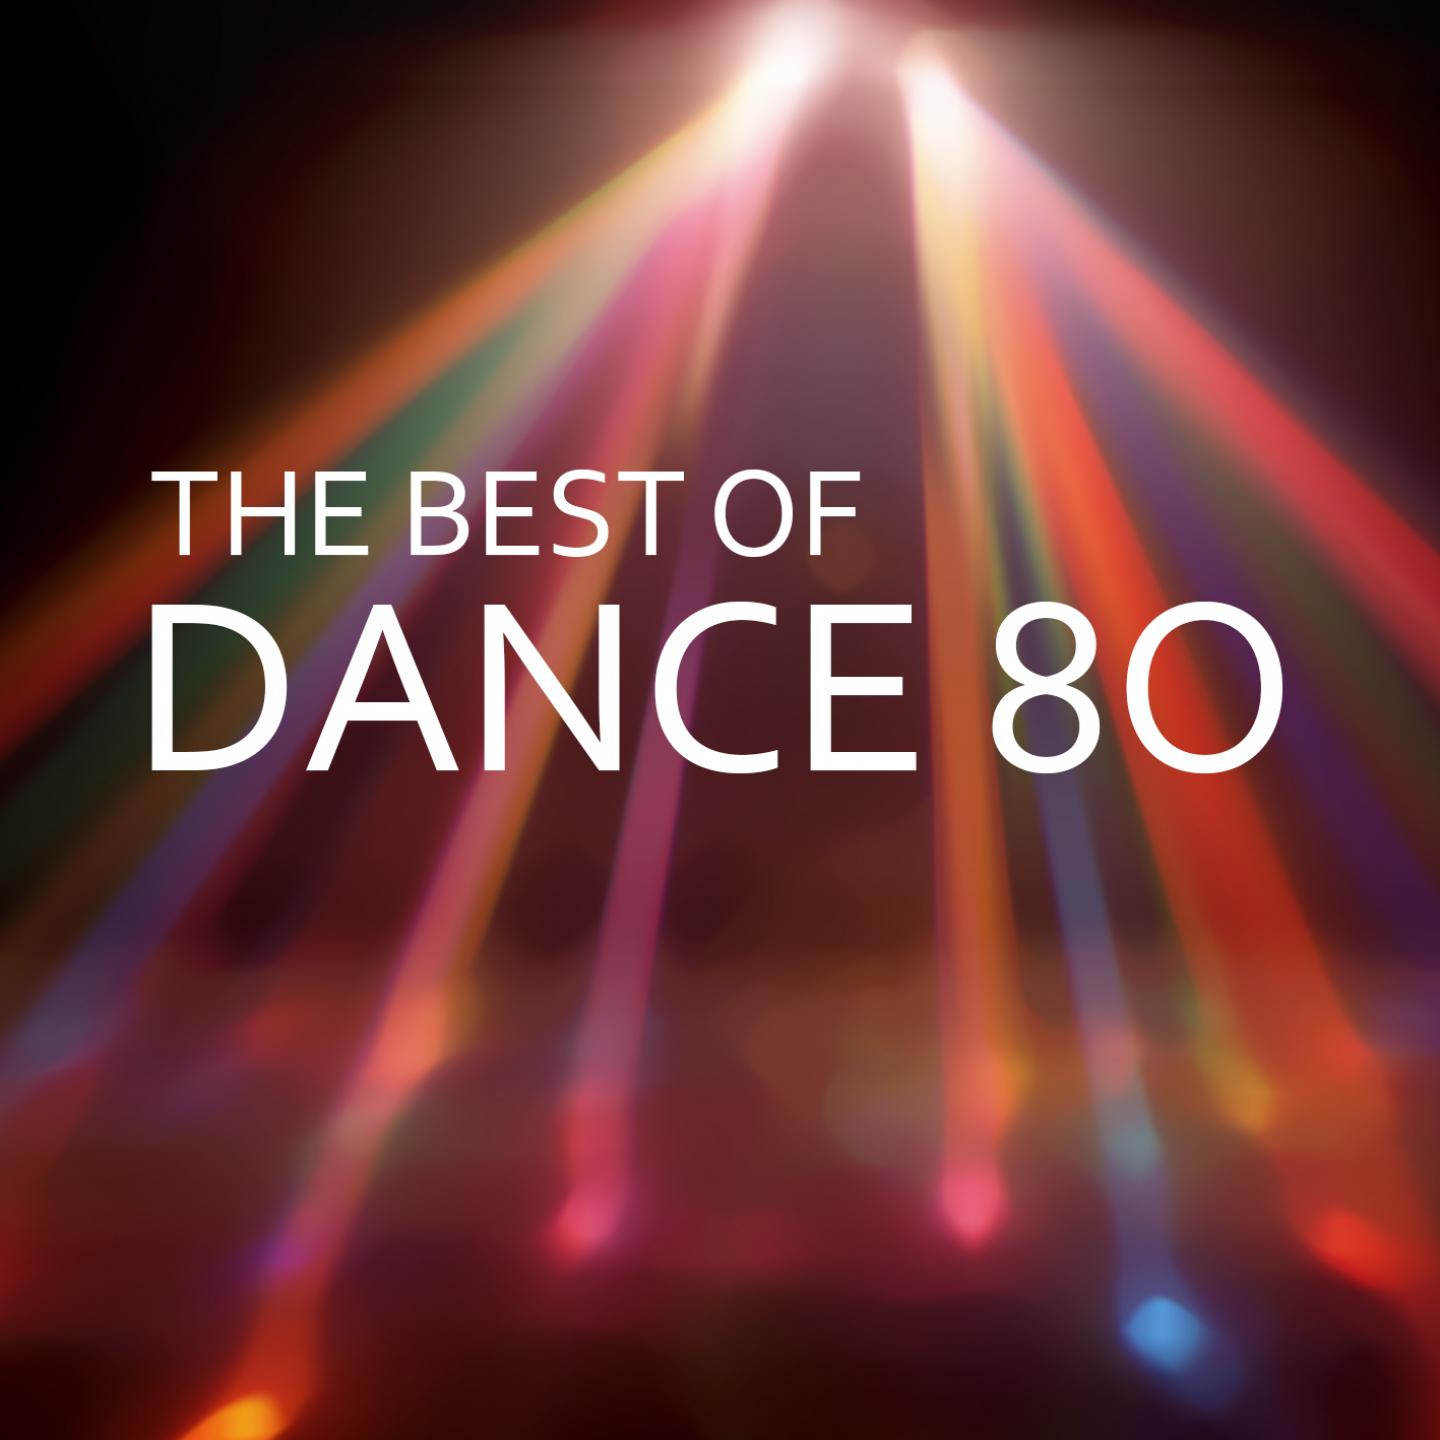 Flac 2015. Поп Певцы 80 90. The best of Dance 80 2015.